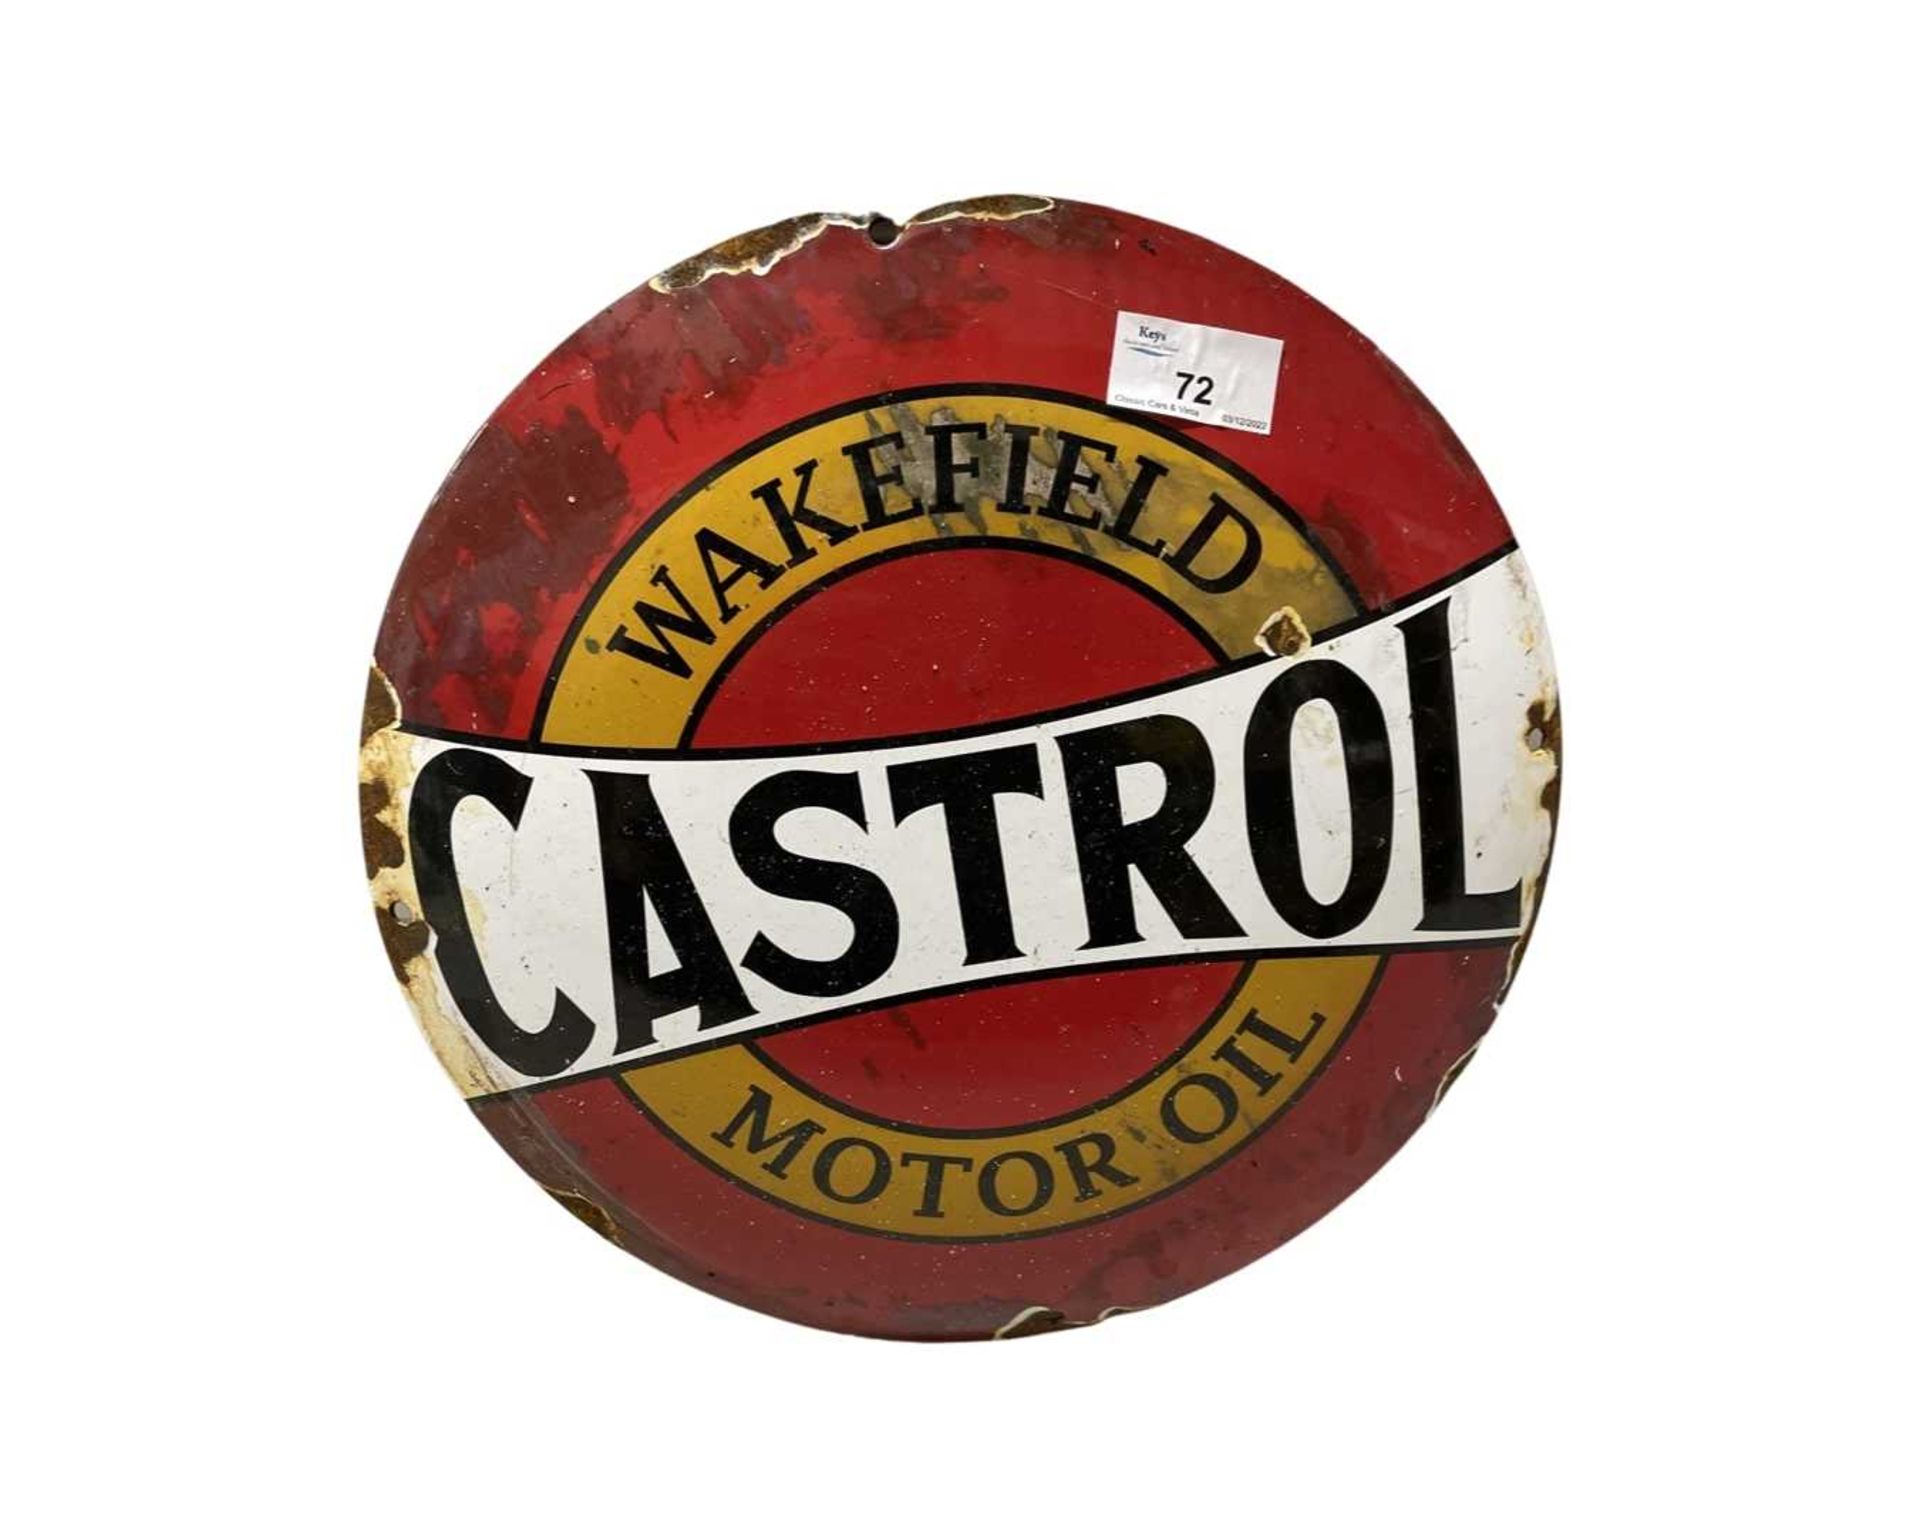 Castrol Motor Oil enamel sign